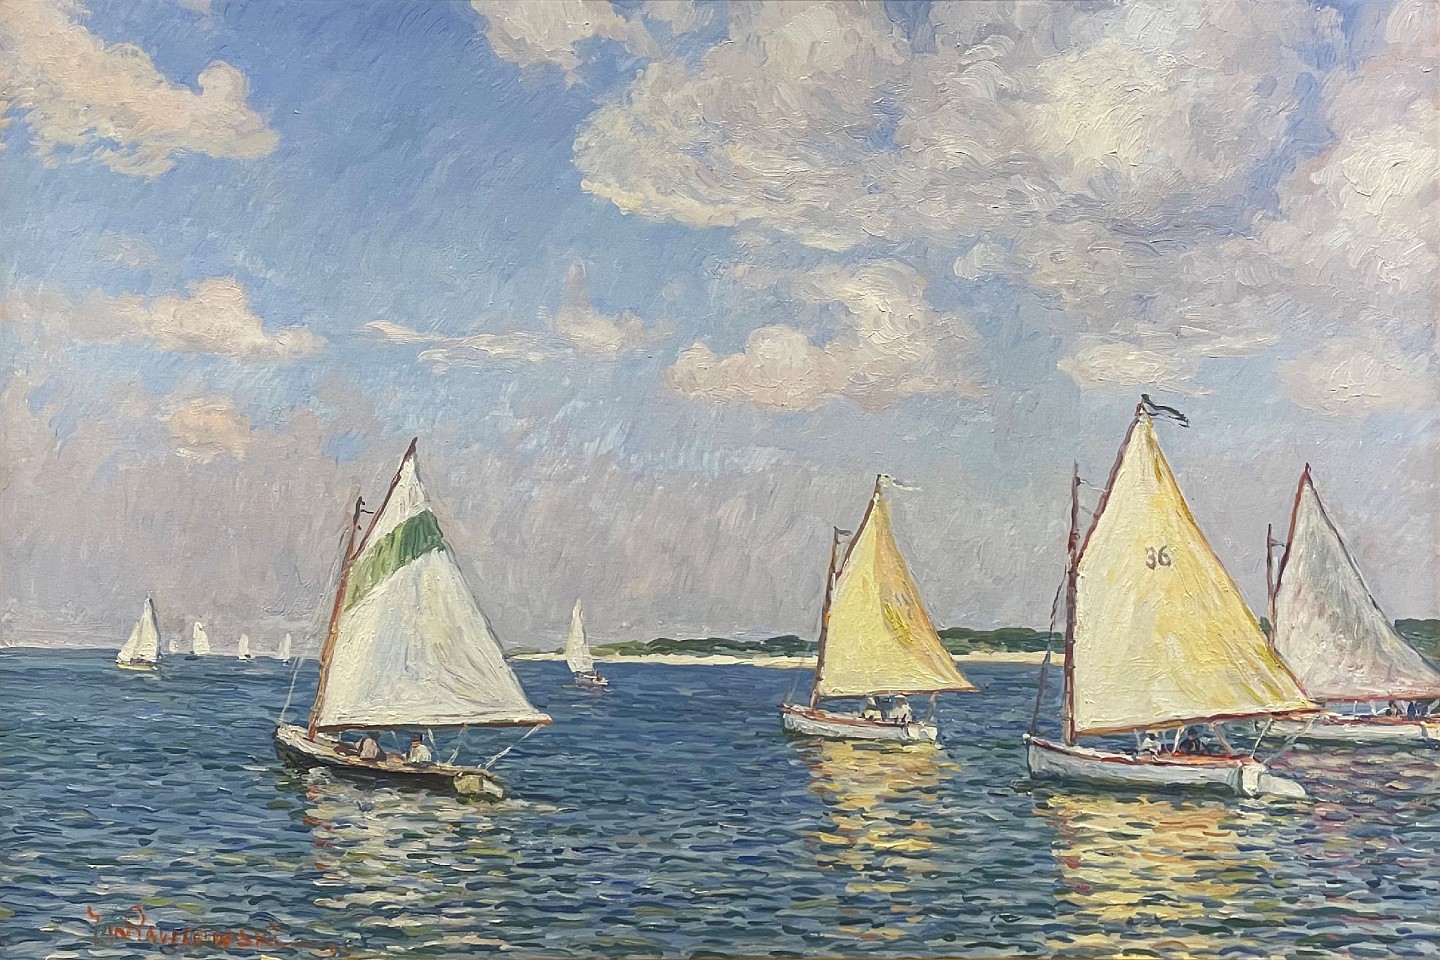 Jan Pawlowski, Racing Catboats, 2022
oil on canvas, 20 x 30 in. (50.8 x 76.2 cm)
JP220803